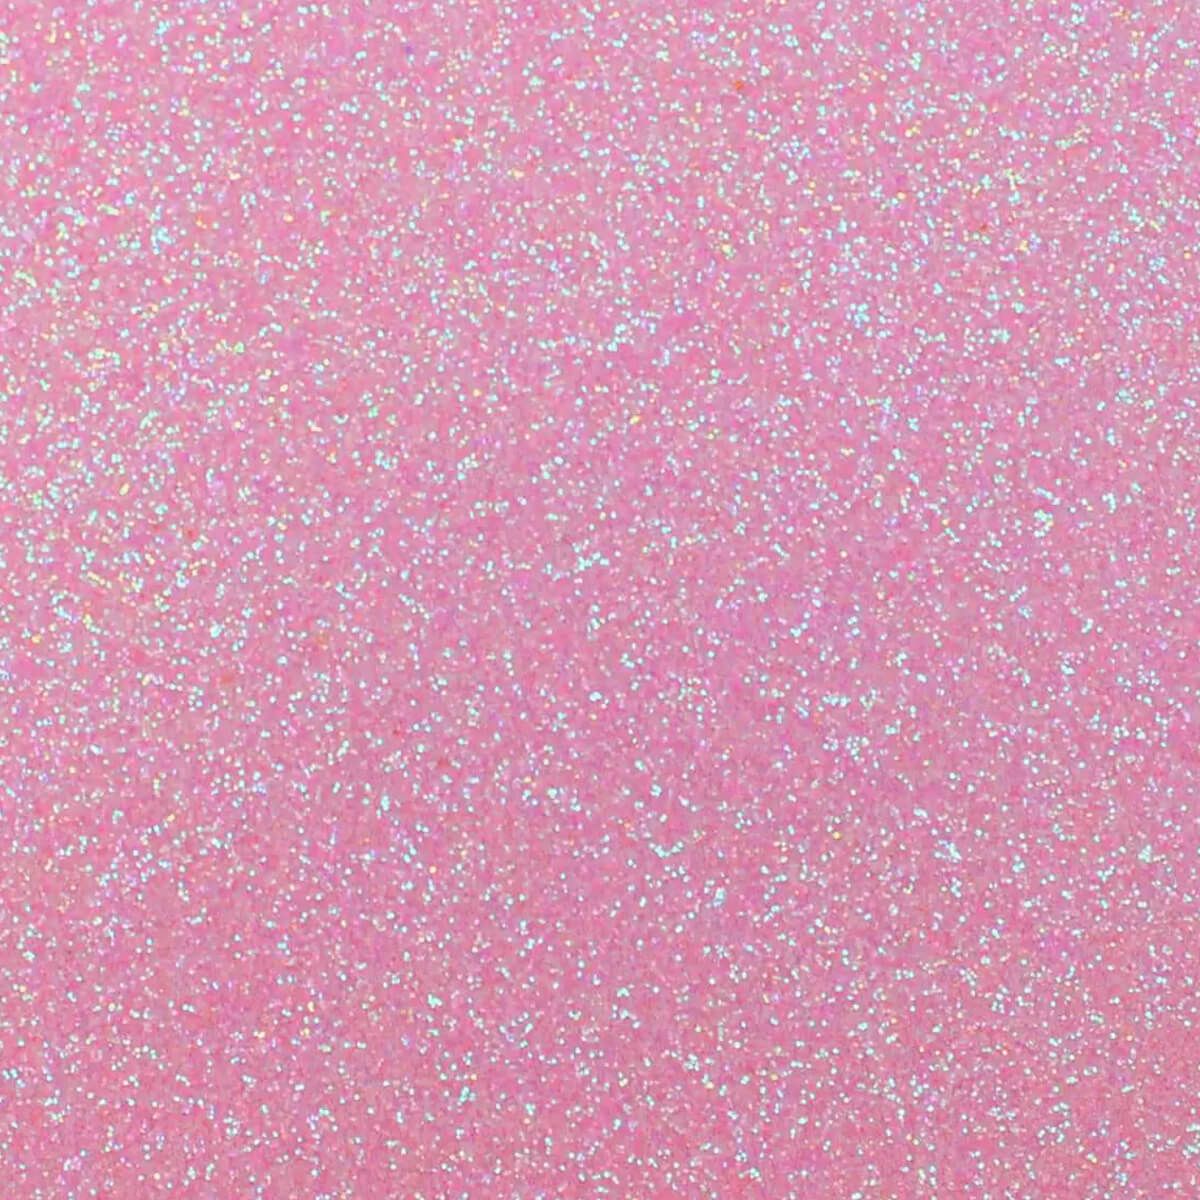 Placa Eva 40x48cm Glitter Rosa Neon Kepel Suprimentos 8103